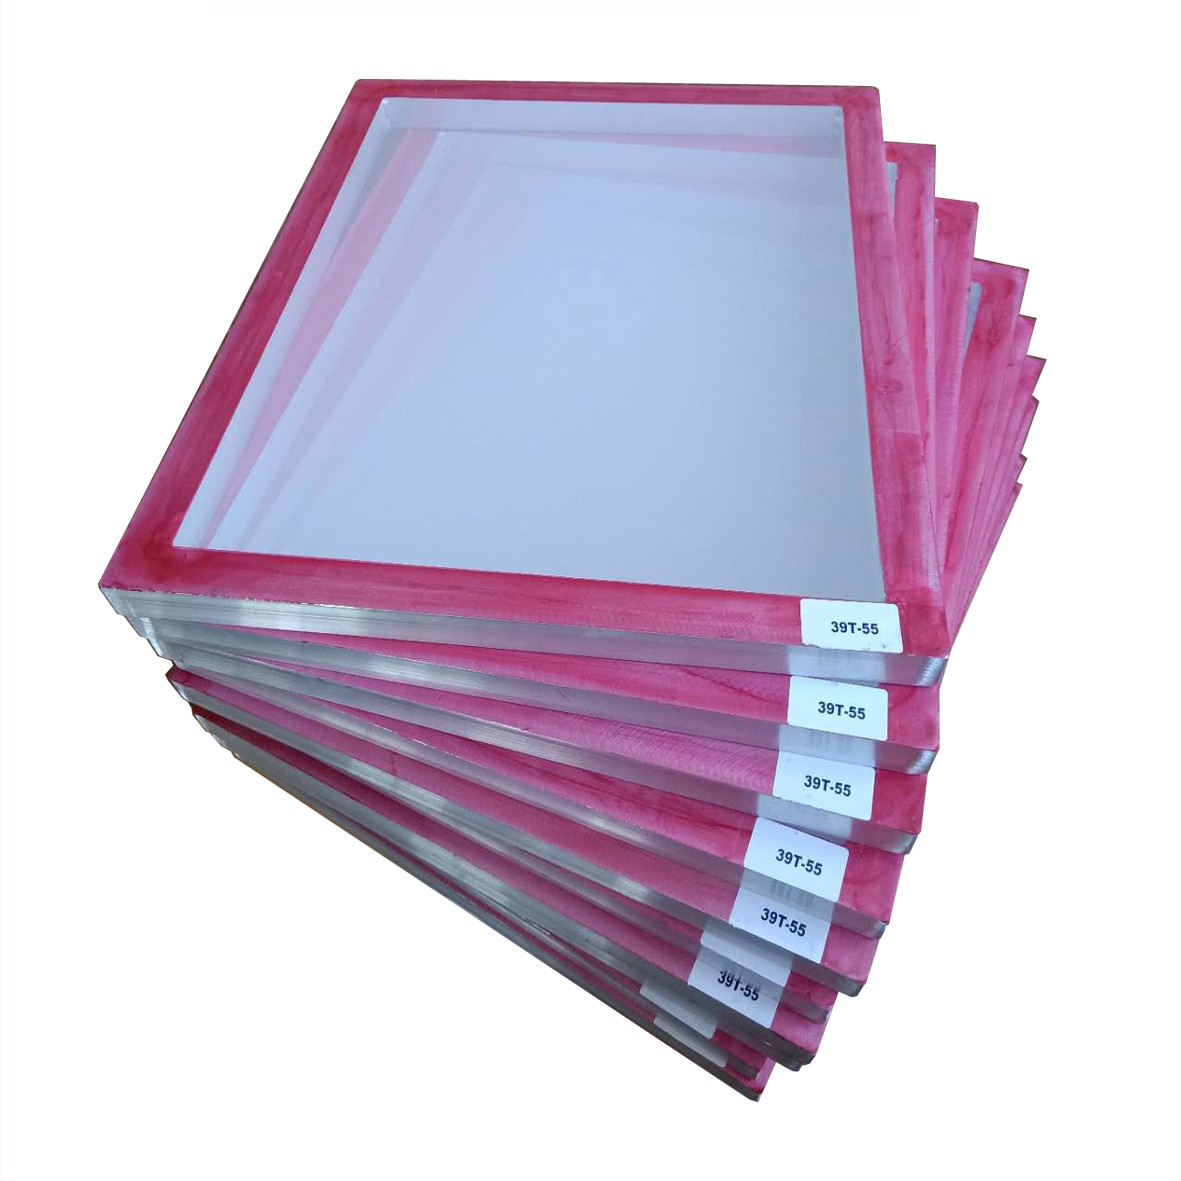 20x24inch Silk screen printing frame